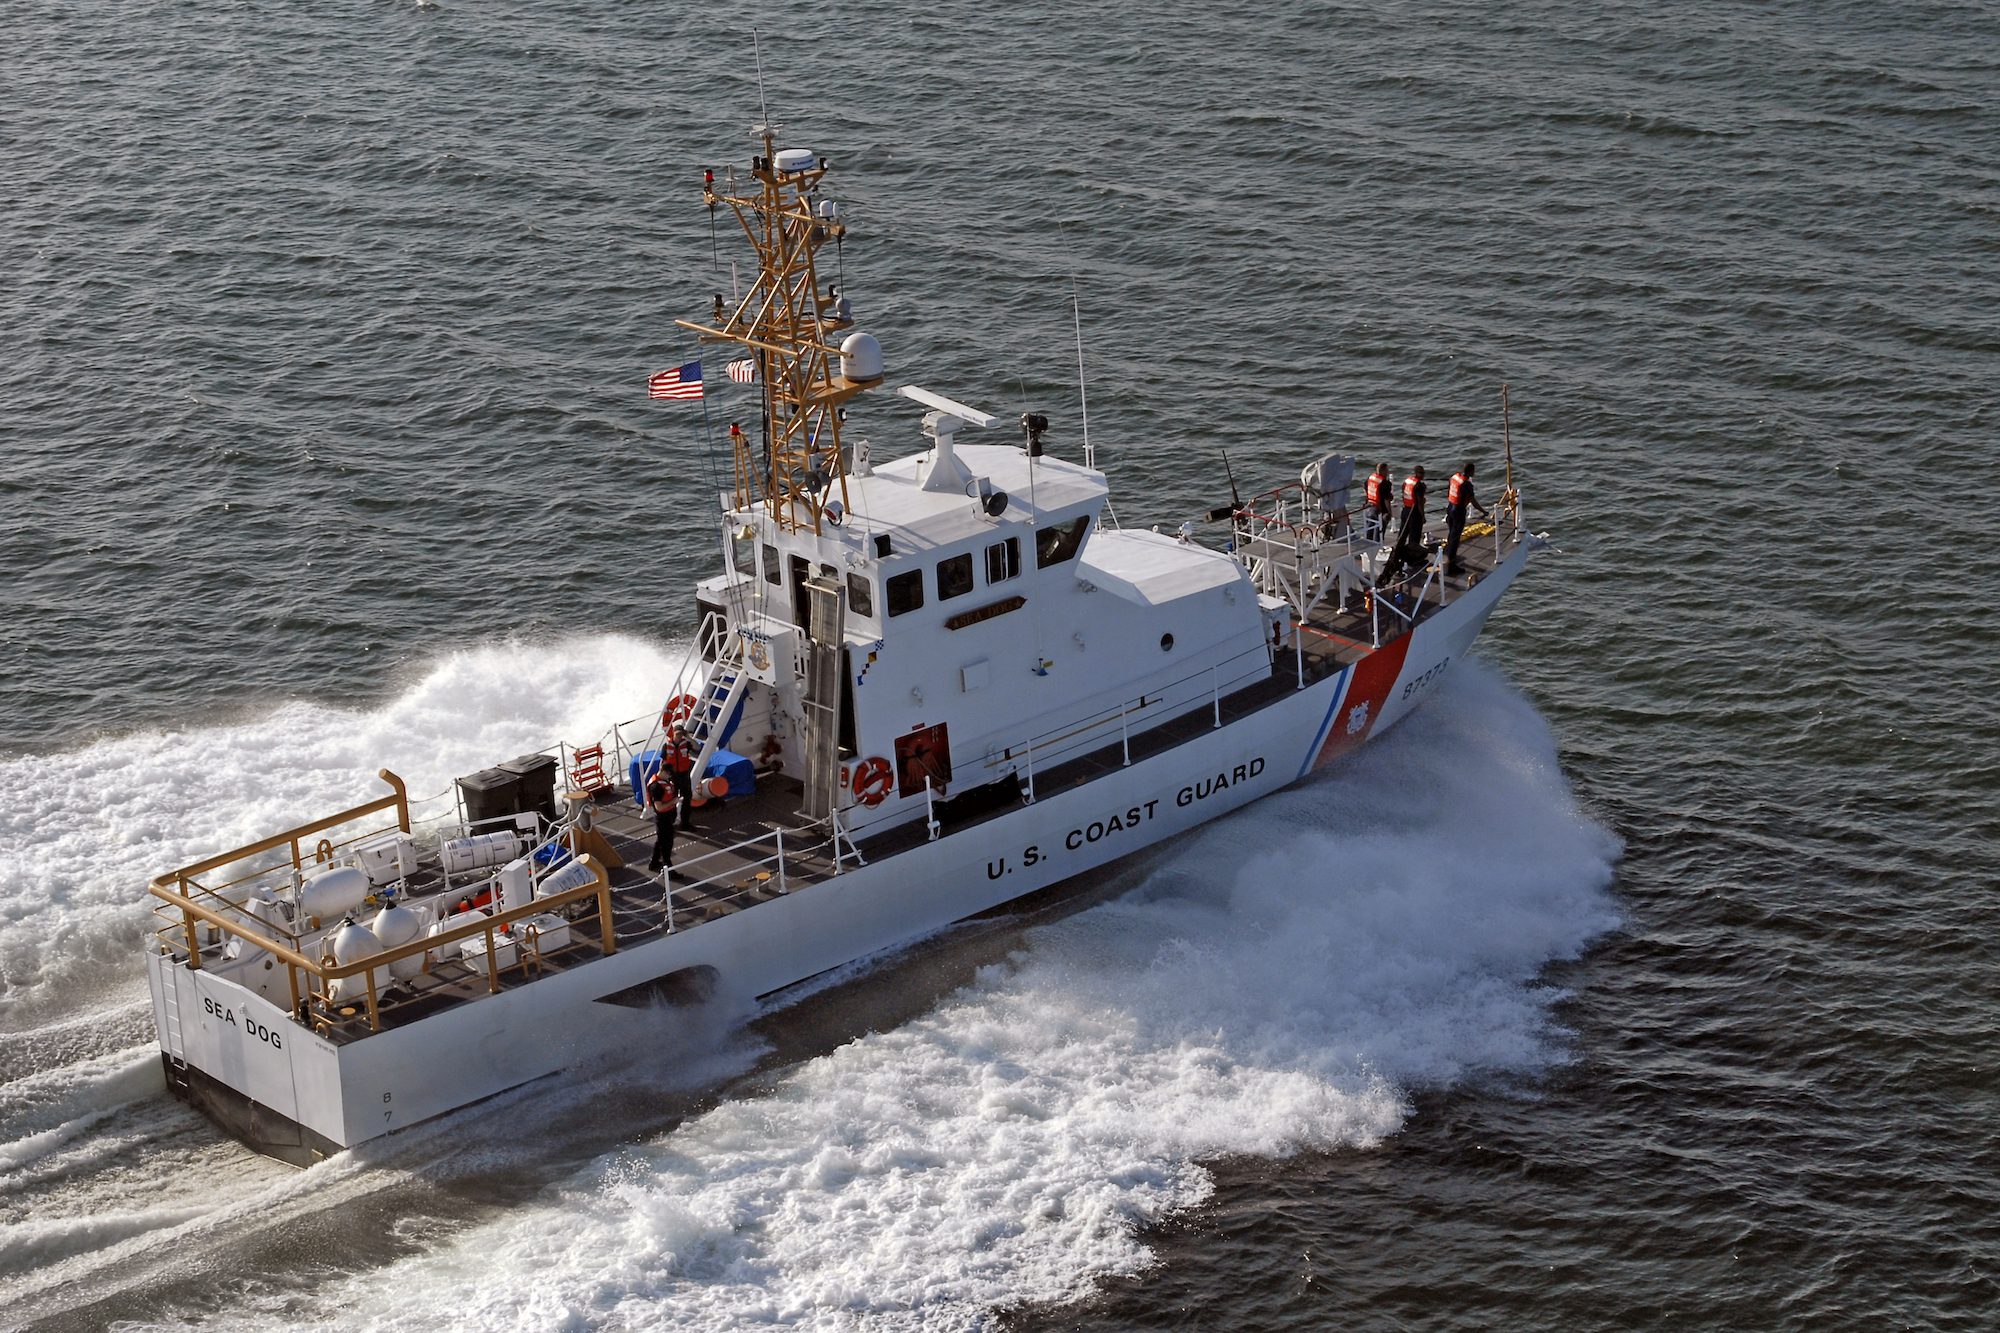 FILE PHOTO: U.S. Coast Guard Cutter Sea Dog during sea trials. U.S. Coast Guard Photo